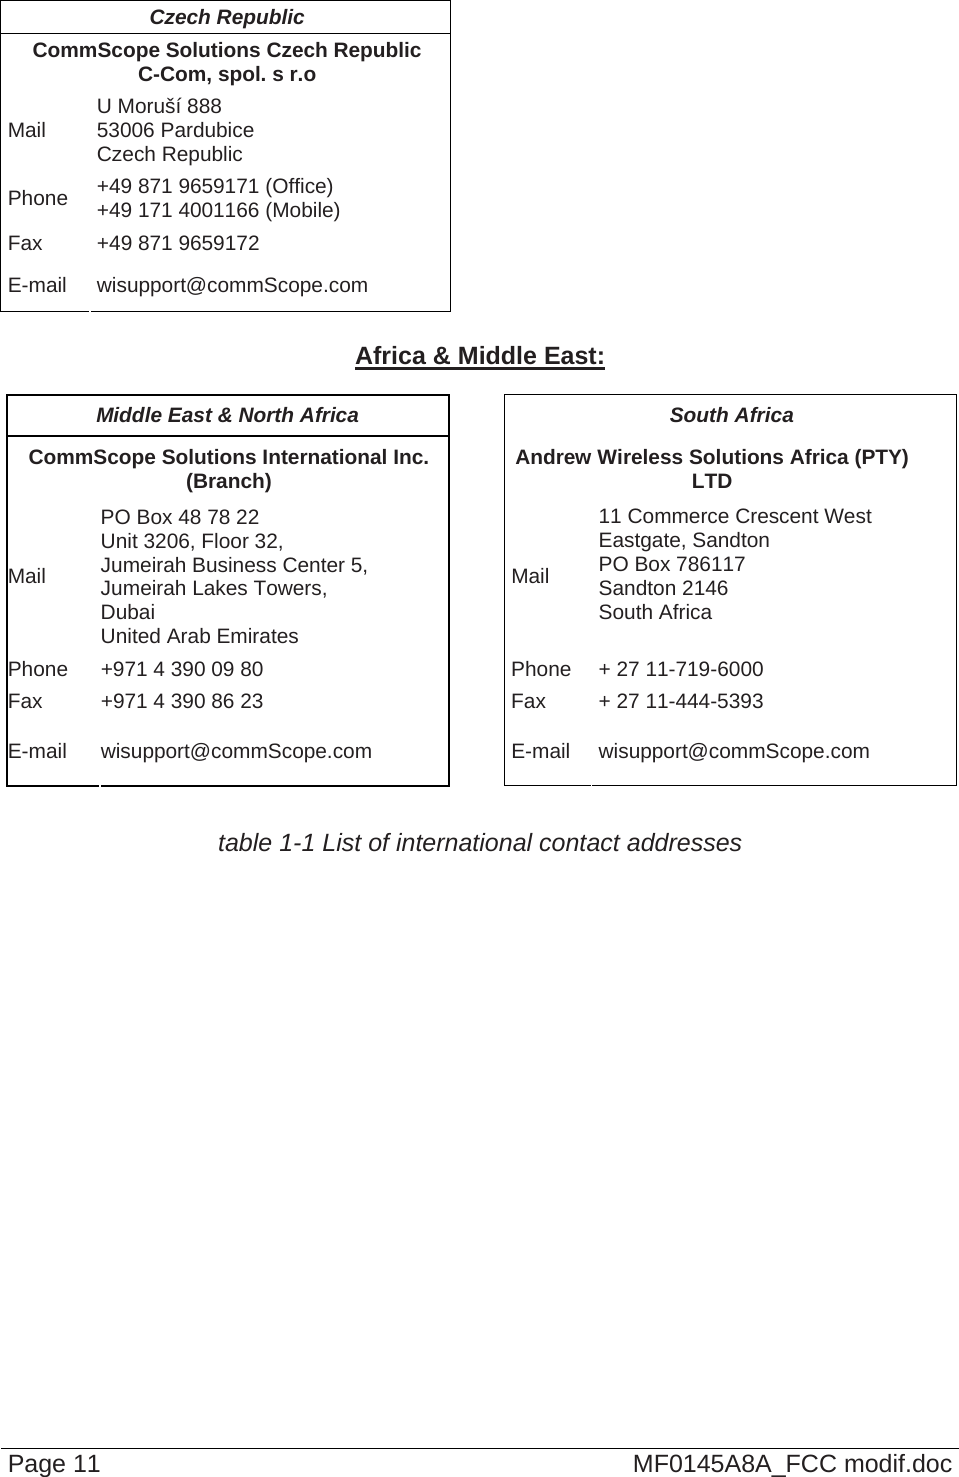  Page 11  MF0145A8A_FCC modif.doc  Czech Republic   CommScope Solutions Czech Republic C-Com, spol. s r.o   Mail  U Moruší 888 53006 Pardubice Czech Republic    Phone  +49 871 9659171 (Office) +49 171 4001166 (Mobile)   Fax  +49 871 9659172     E-mail wisupport@commScope.com     Africa &amp; Middle East:  Middle East &amp; North Africa  South Africa CommScope Solutions International Inc. (Branch)  Andrew Wireless Solutions Africa (PTY) LTD Mail PO Box 48 78 22 Unit 3206, Floor 32, Jumeirah Business Center 5,  Jumeirah Lakes Towers, Dubai United Arab Emirates Mail 11 Commerce Crescent West Eastgate, Sandton  PO Box 786117 Sandton 2146 South Africa Phone  +971 4 390 09 80  Phone  + 27 11-719-6000 Fax  +971 4 390 86 23  Fax  + 27 11-444-5393  E-mail wisupport@commScope.com  E-mail wisupport@commScope.com  table 1-1 List of international contact addresses   